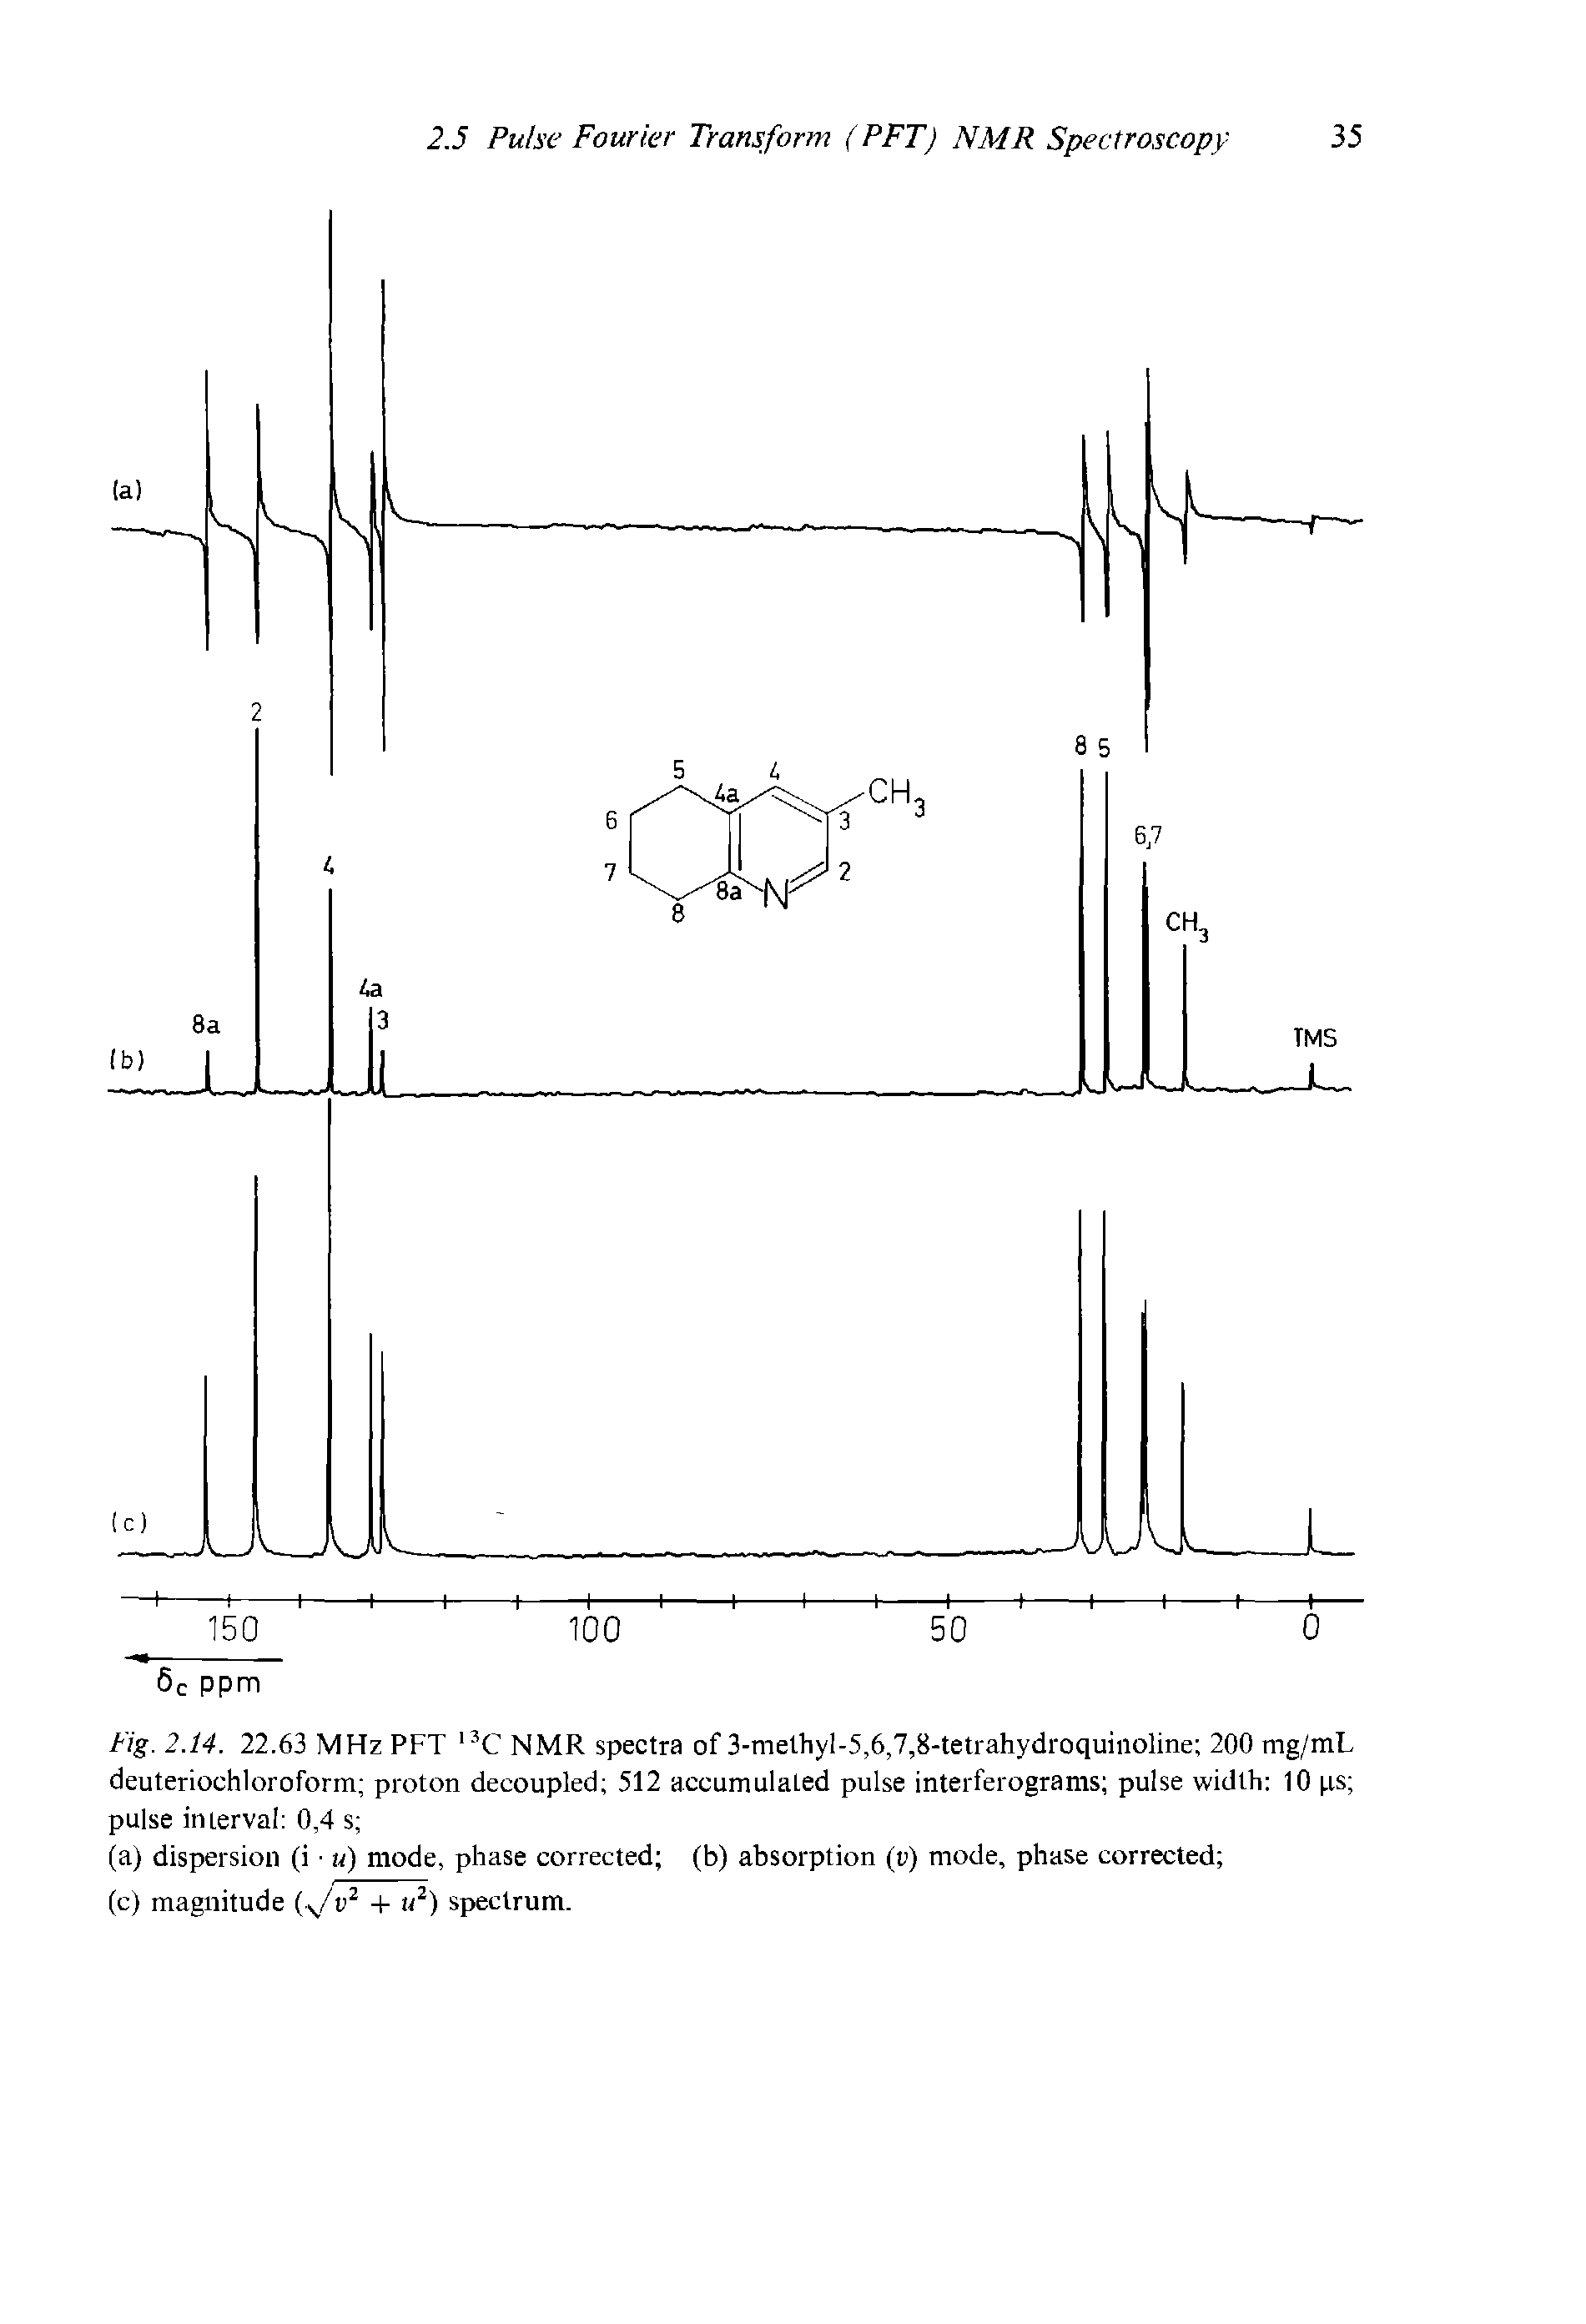 Fig. 2.14. 22.63 MHz PFT 13C NMR spectra of 3-methyl-5,6,7,8-tetrahydroquinoline 200 mg/mL deuteriochloroform proton decoupled 512 accumulated pulse interferograms pulse width 10 ps pulse interval 0,4 s ...